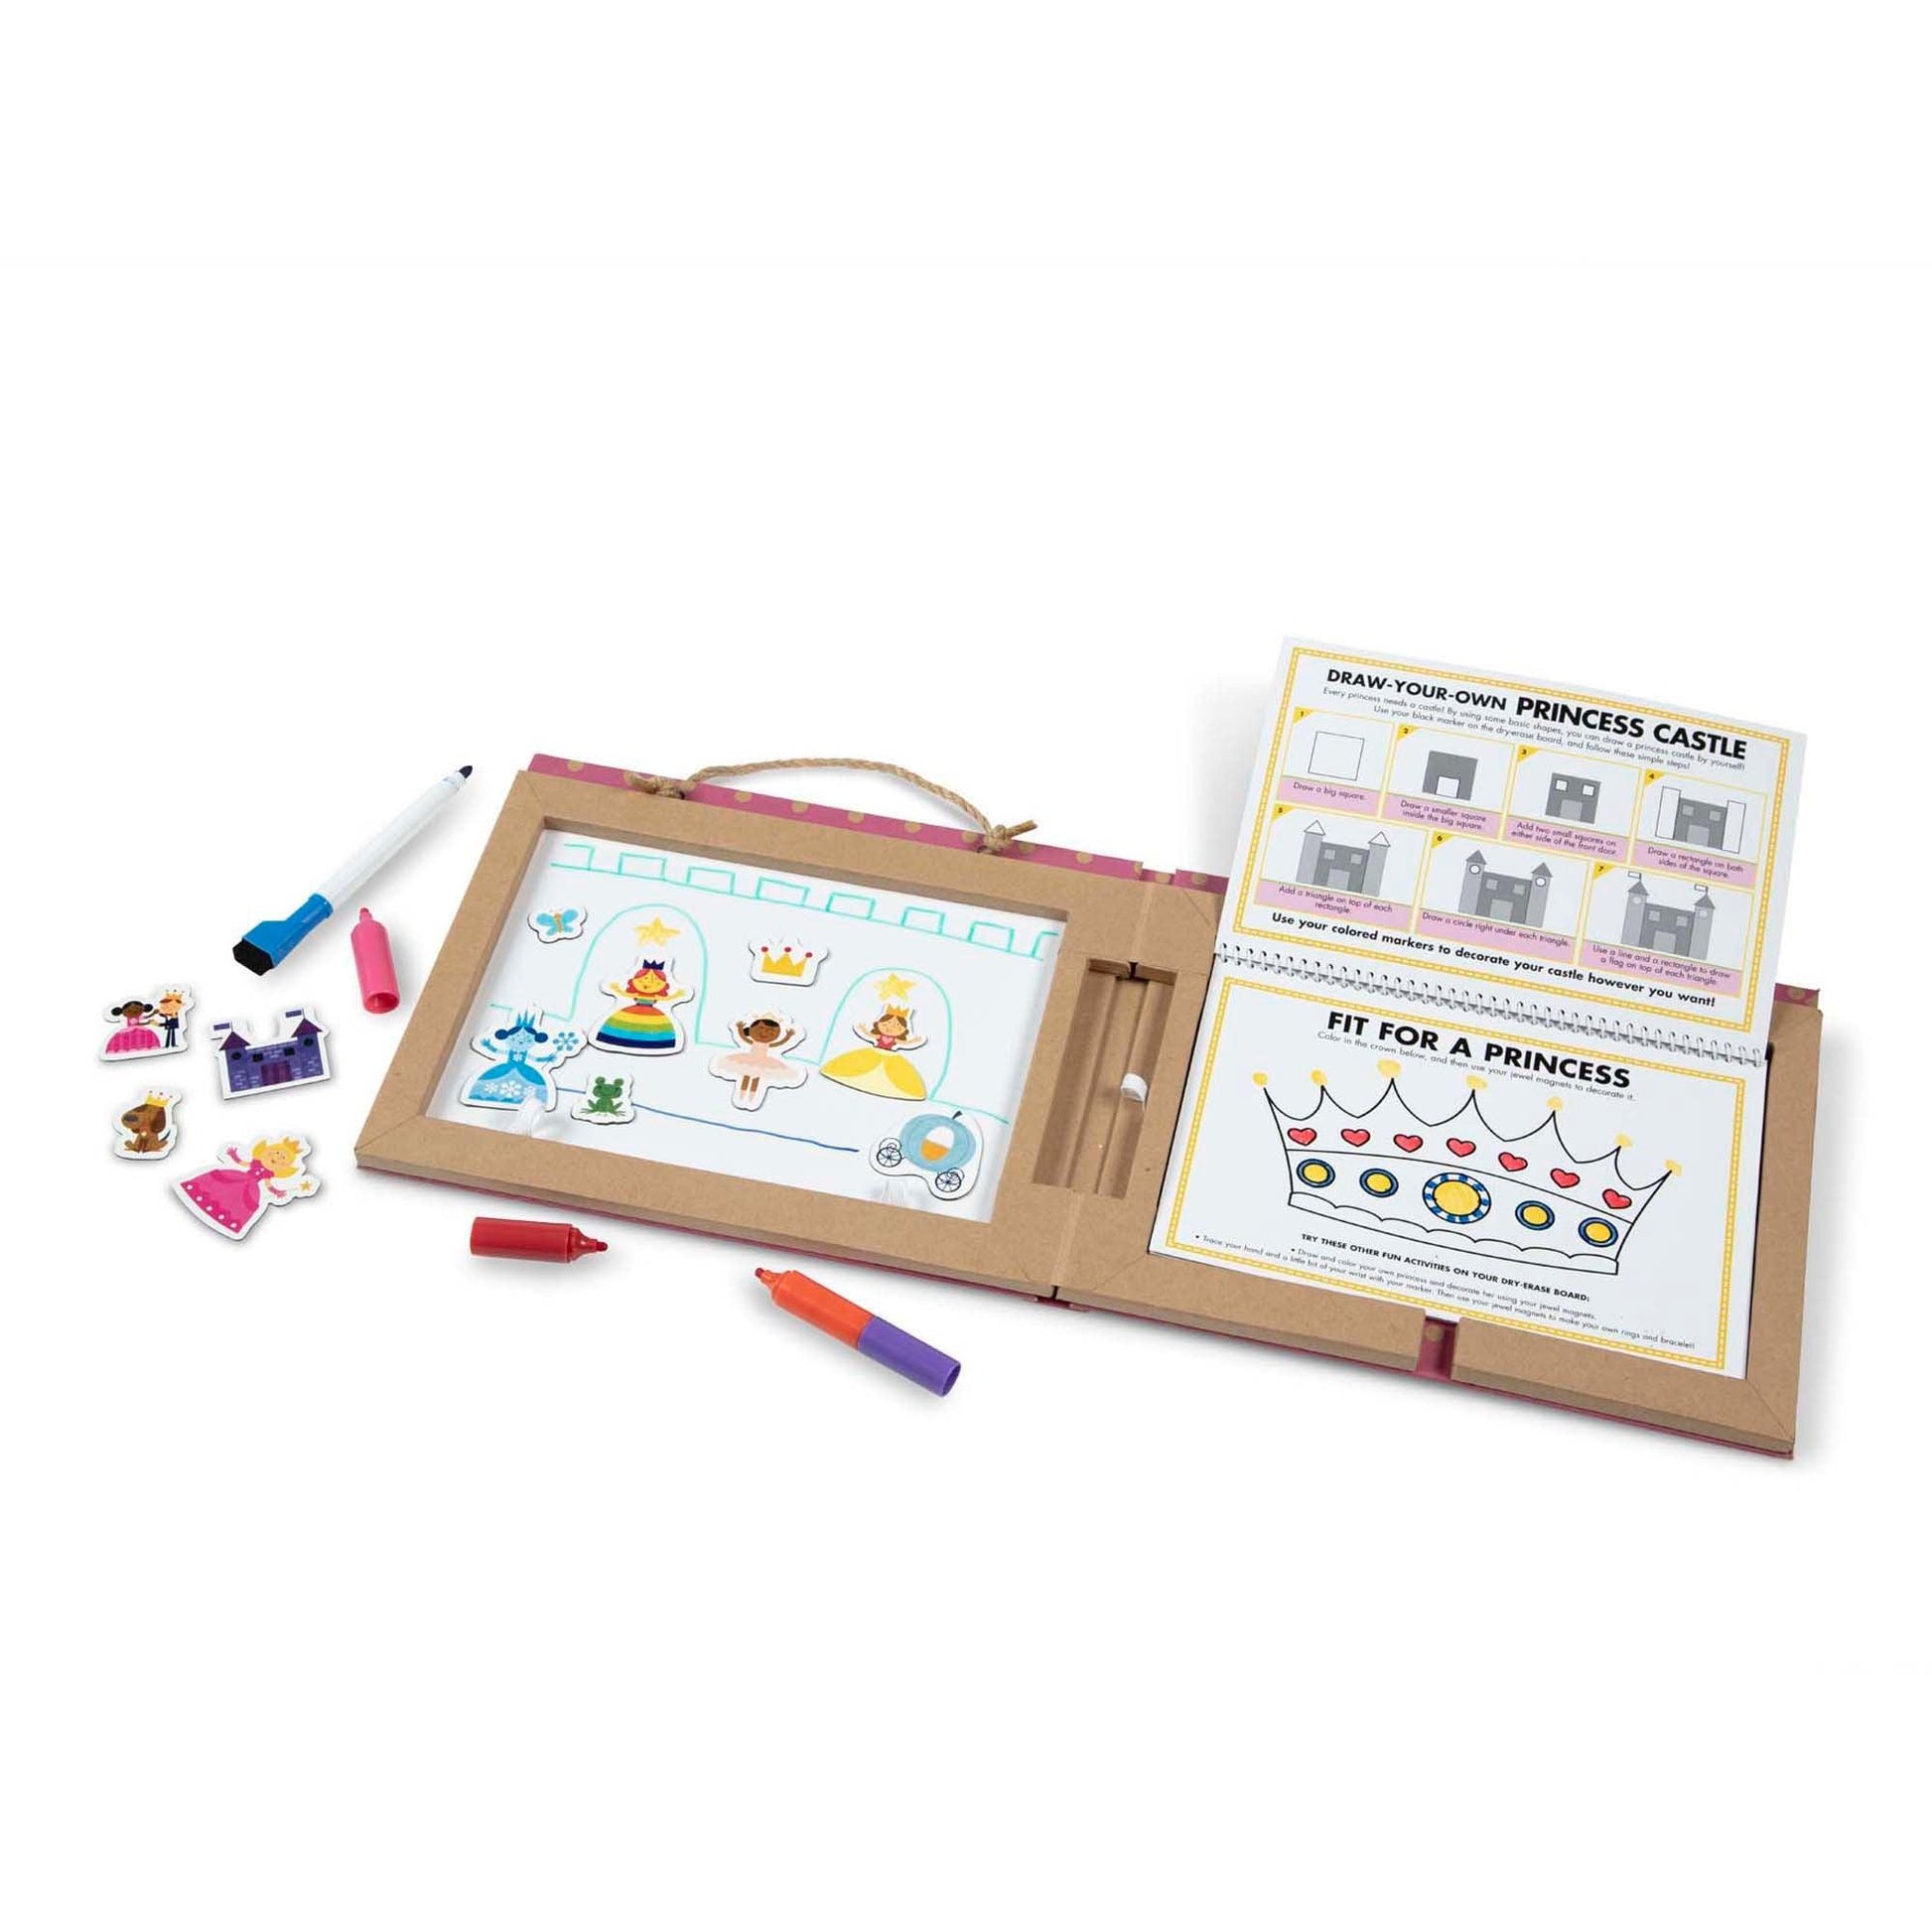 Natural Play: Play, Draw, Create Reusable Drawing & Magnet Kit - Princesses - Loomini